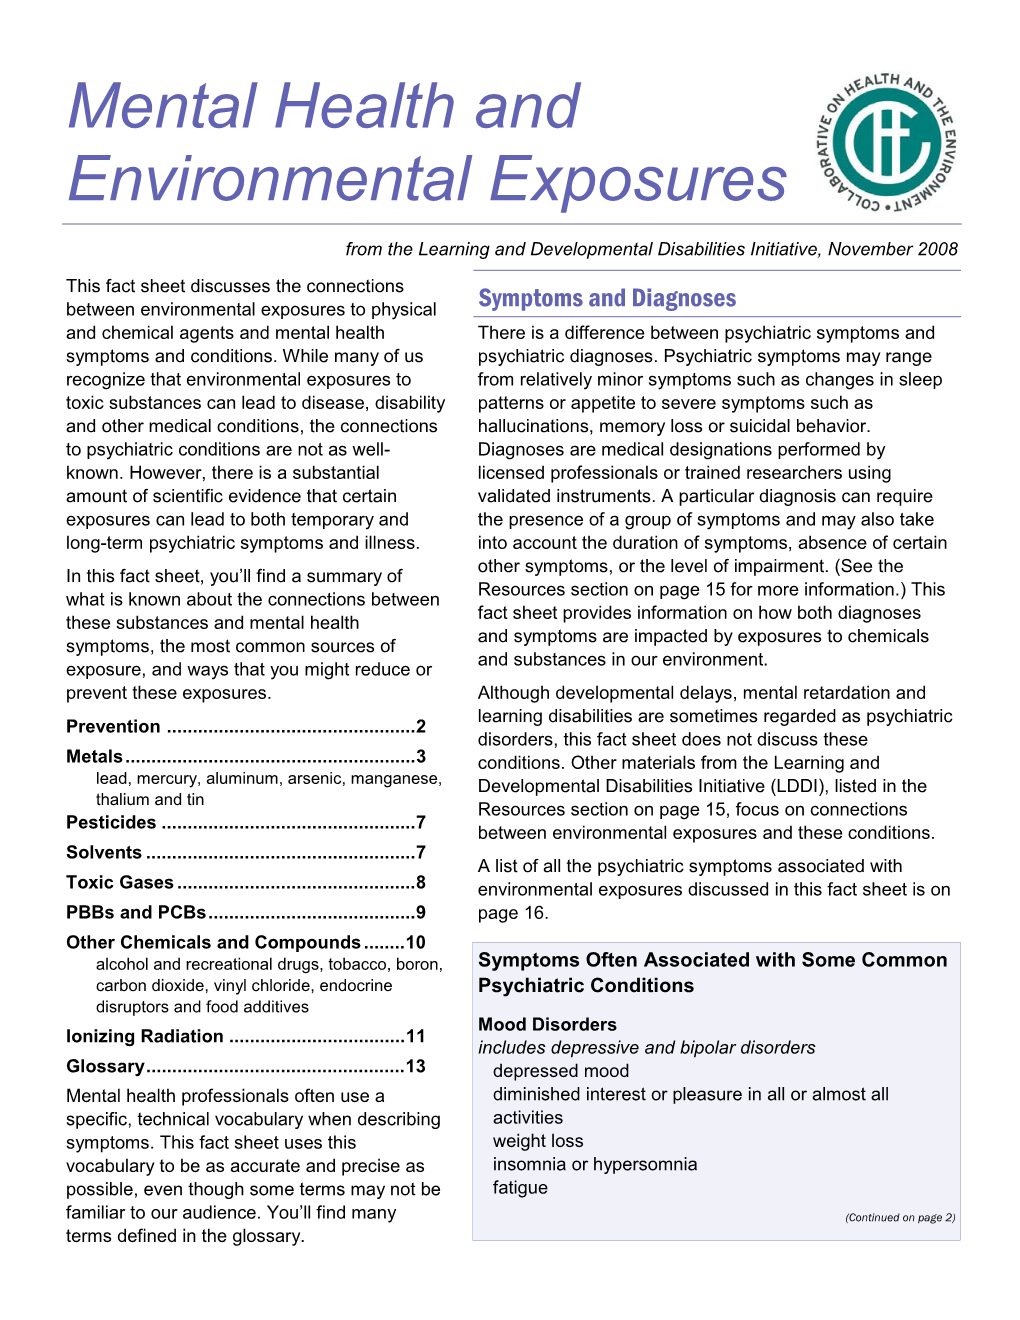 Mental Health and Environmental Exposures